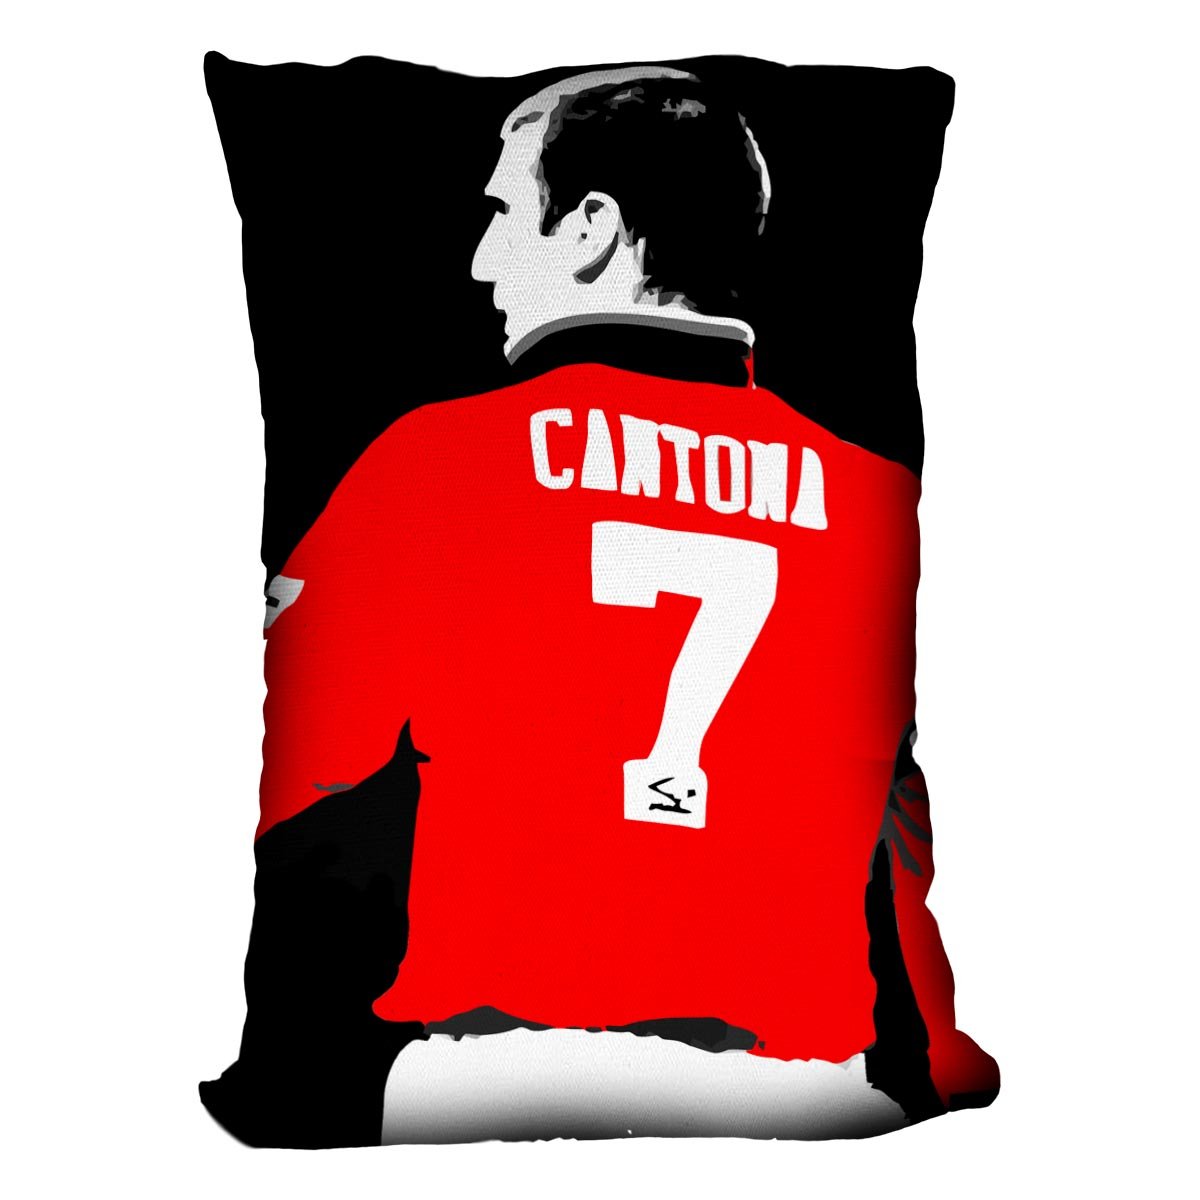 Eric Cantona No 7 Cushion